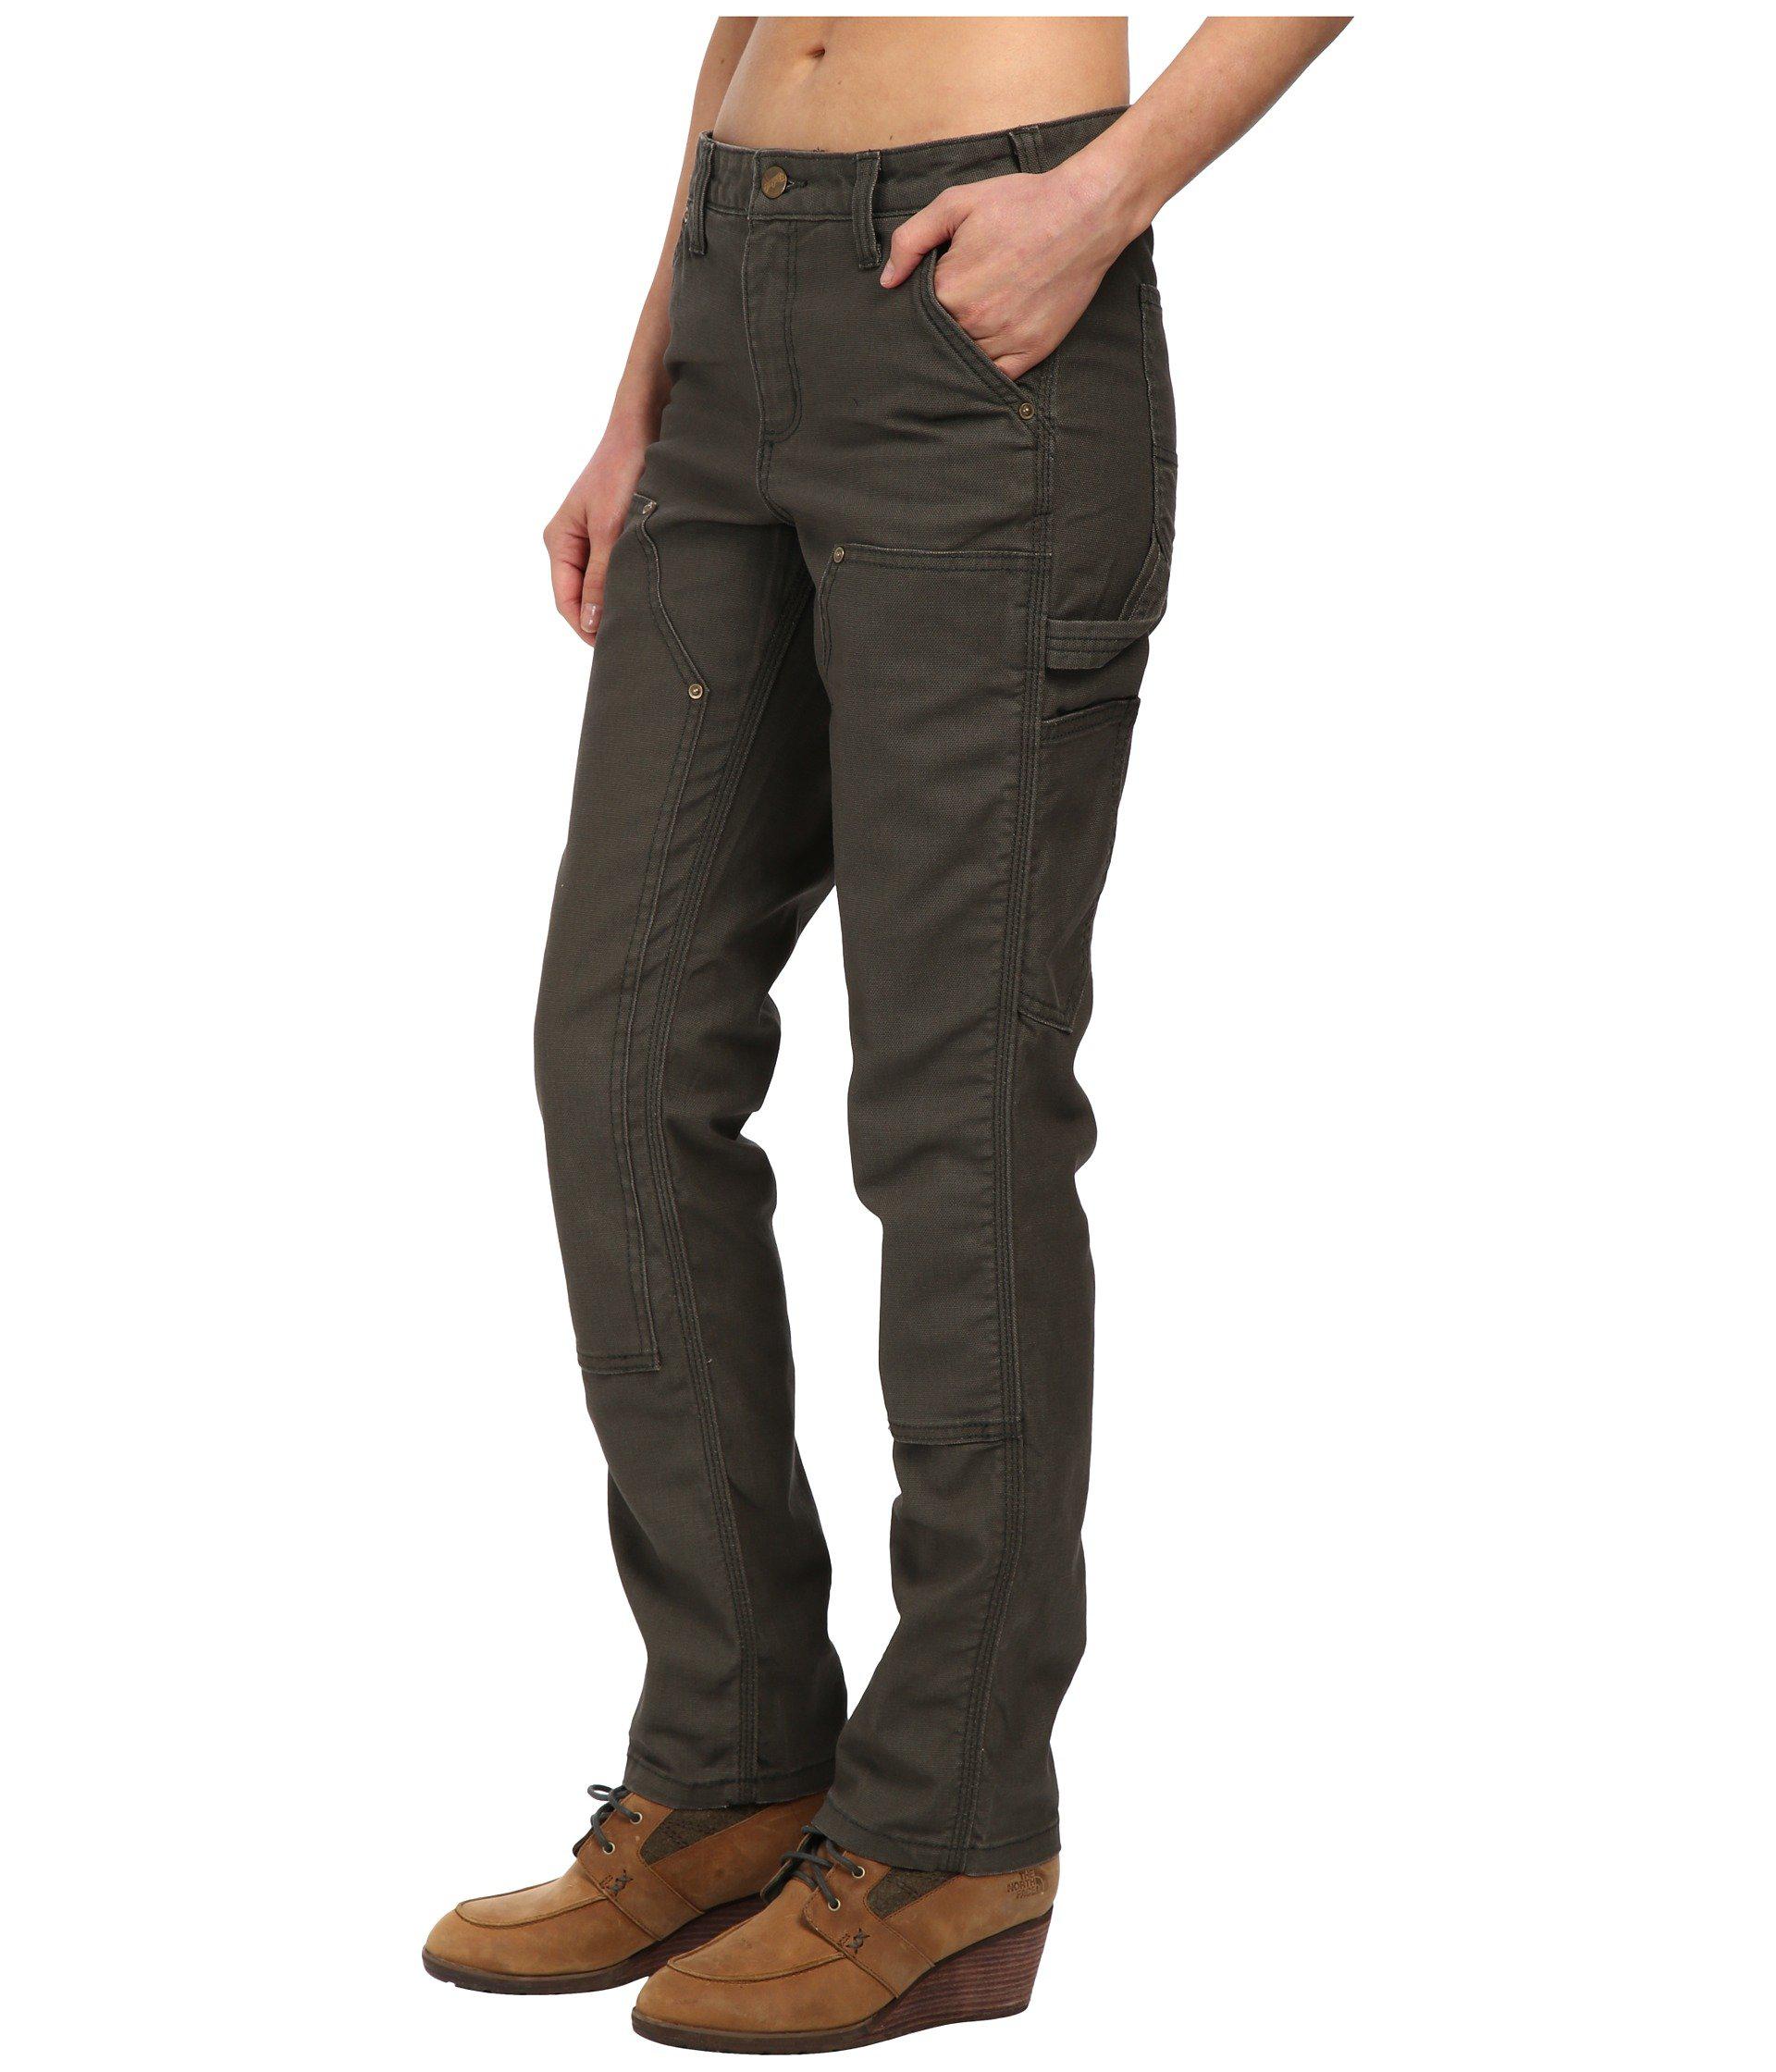 https://cdna.lystit.com/photos/zappos/1bd5558f/carhartt-Moss-Slim-Fit-Double-front-Canvas-Dungaree-Jeans-moss-Womens-Jeans.jpeg